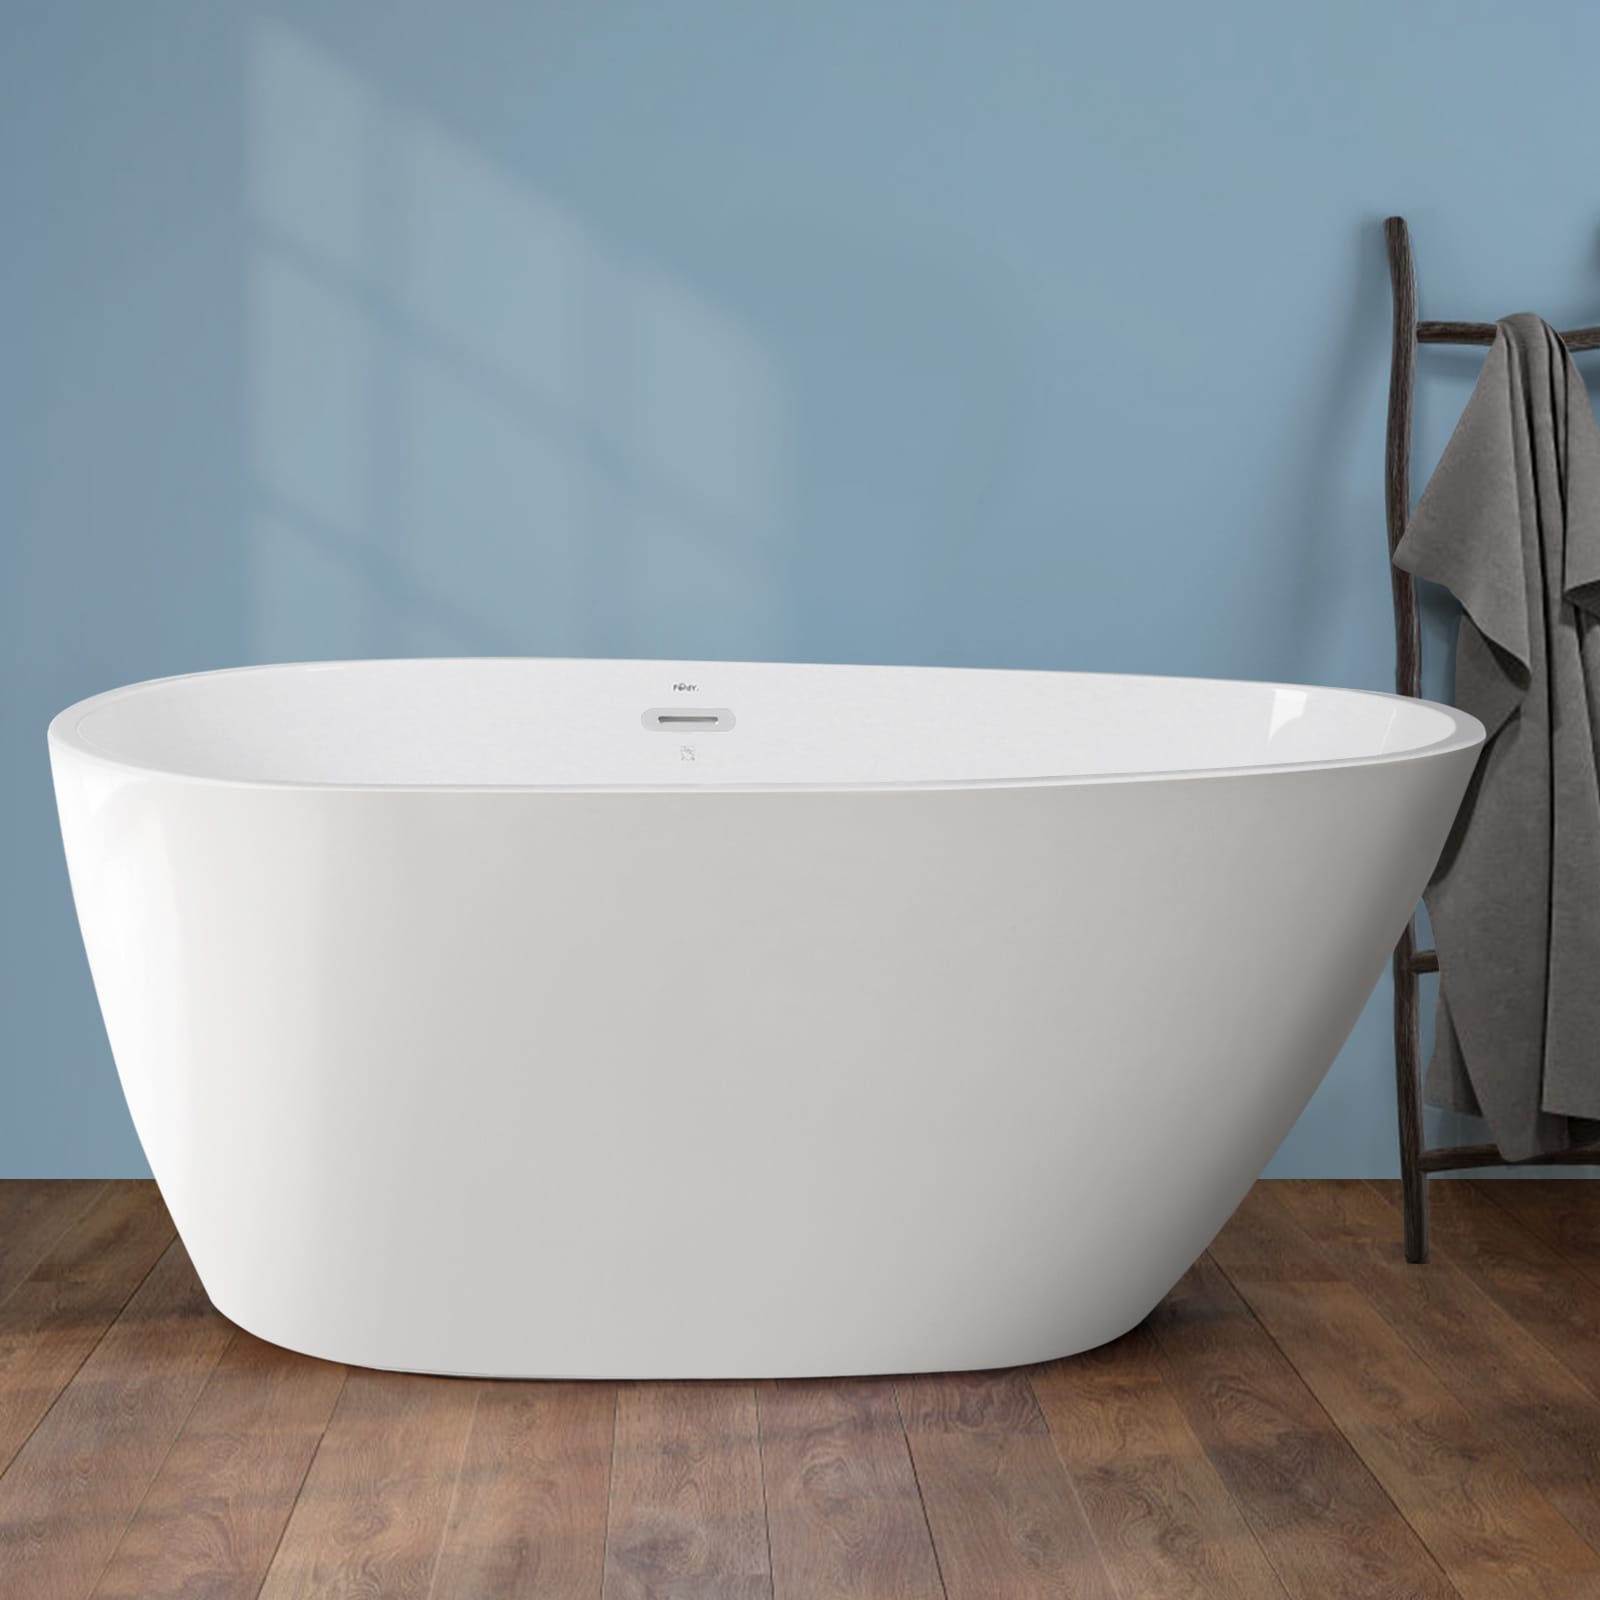 Tamago 29.5-in x 55.1-in White Acrylic Oval Freestanding Soaking Bathtub with Drain (Center Drain) | -02561-1400 - FerdY FERDY-02561-1400